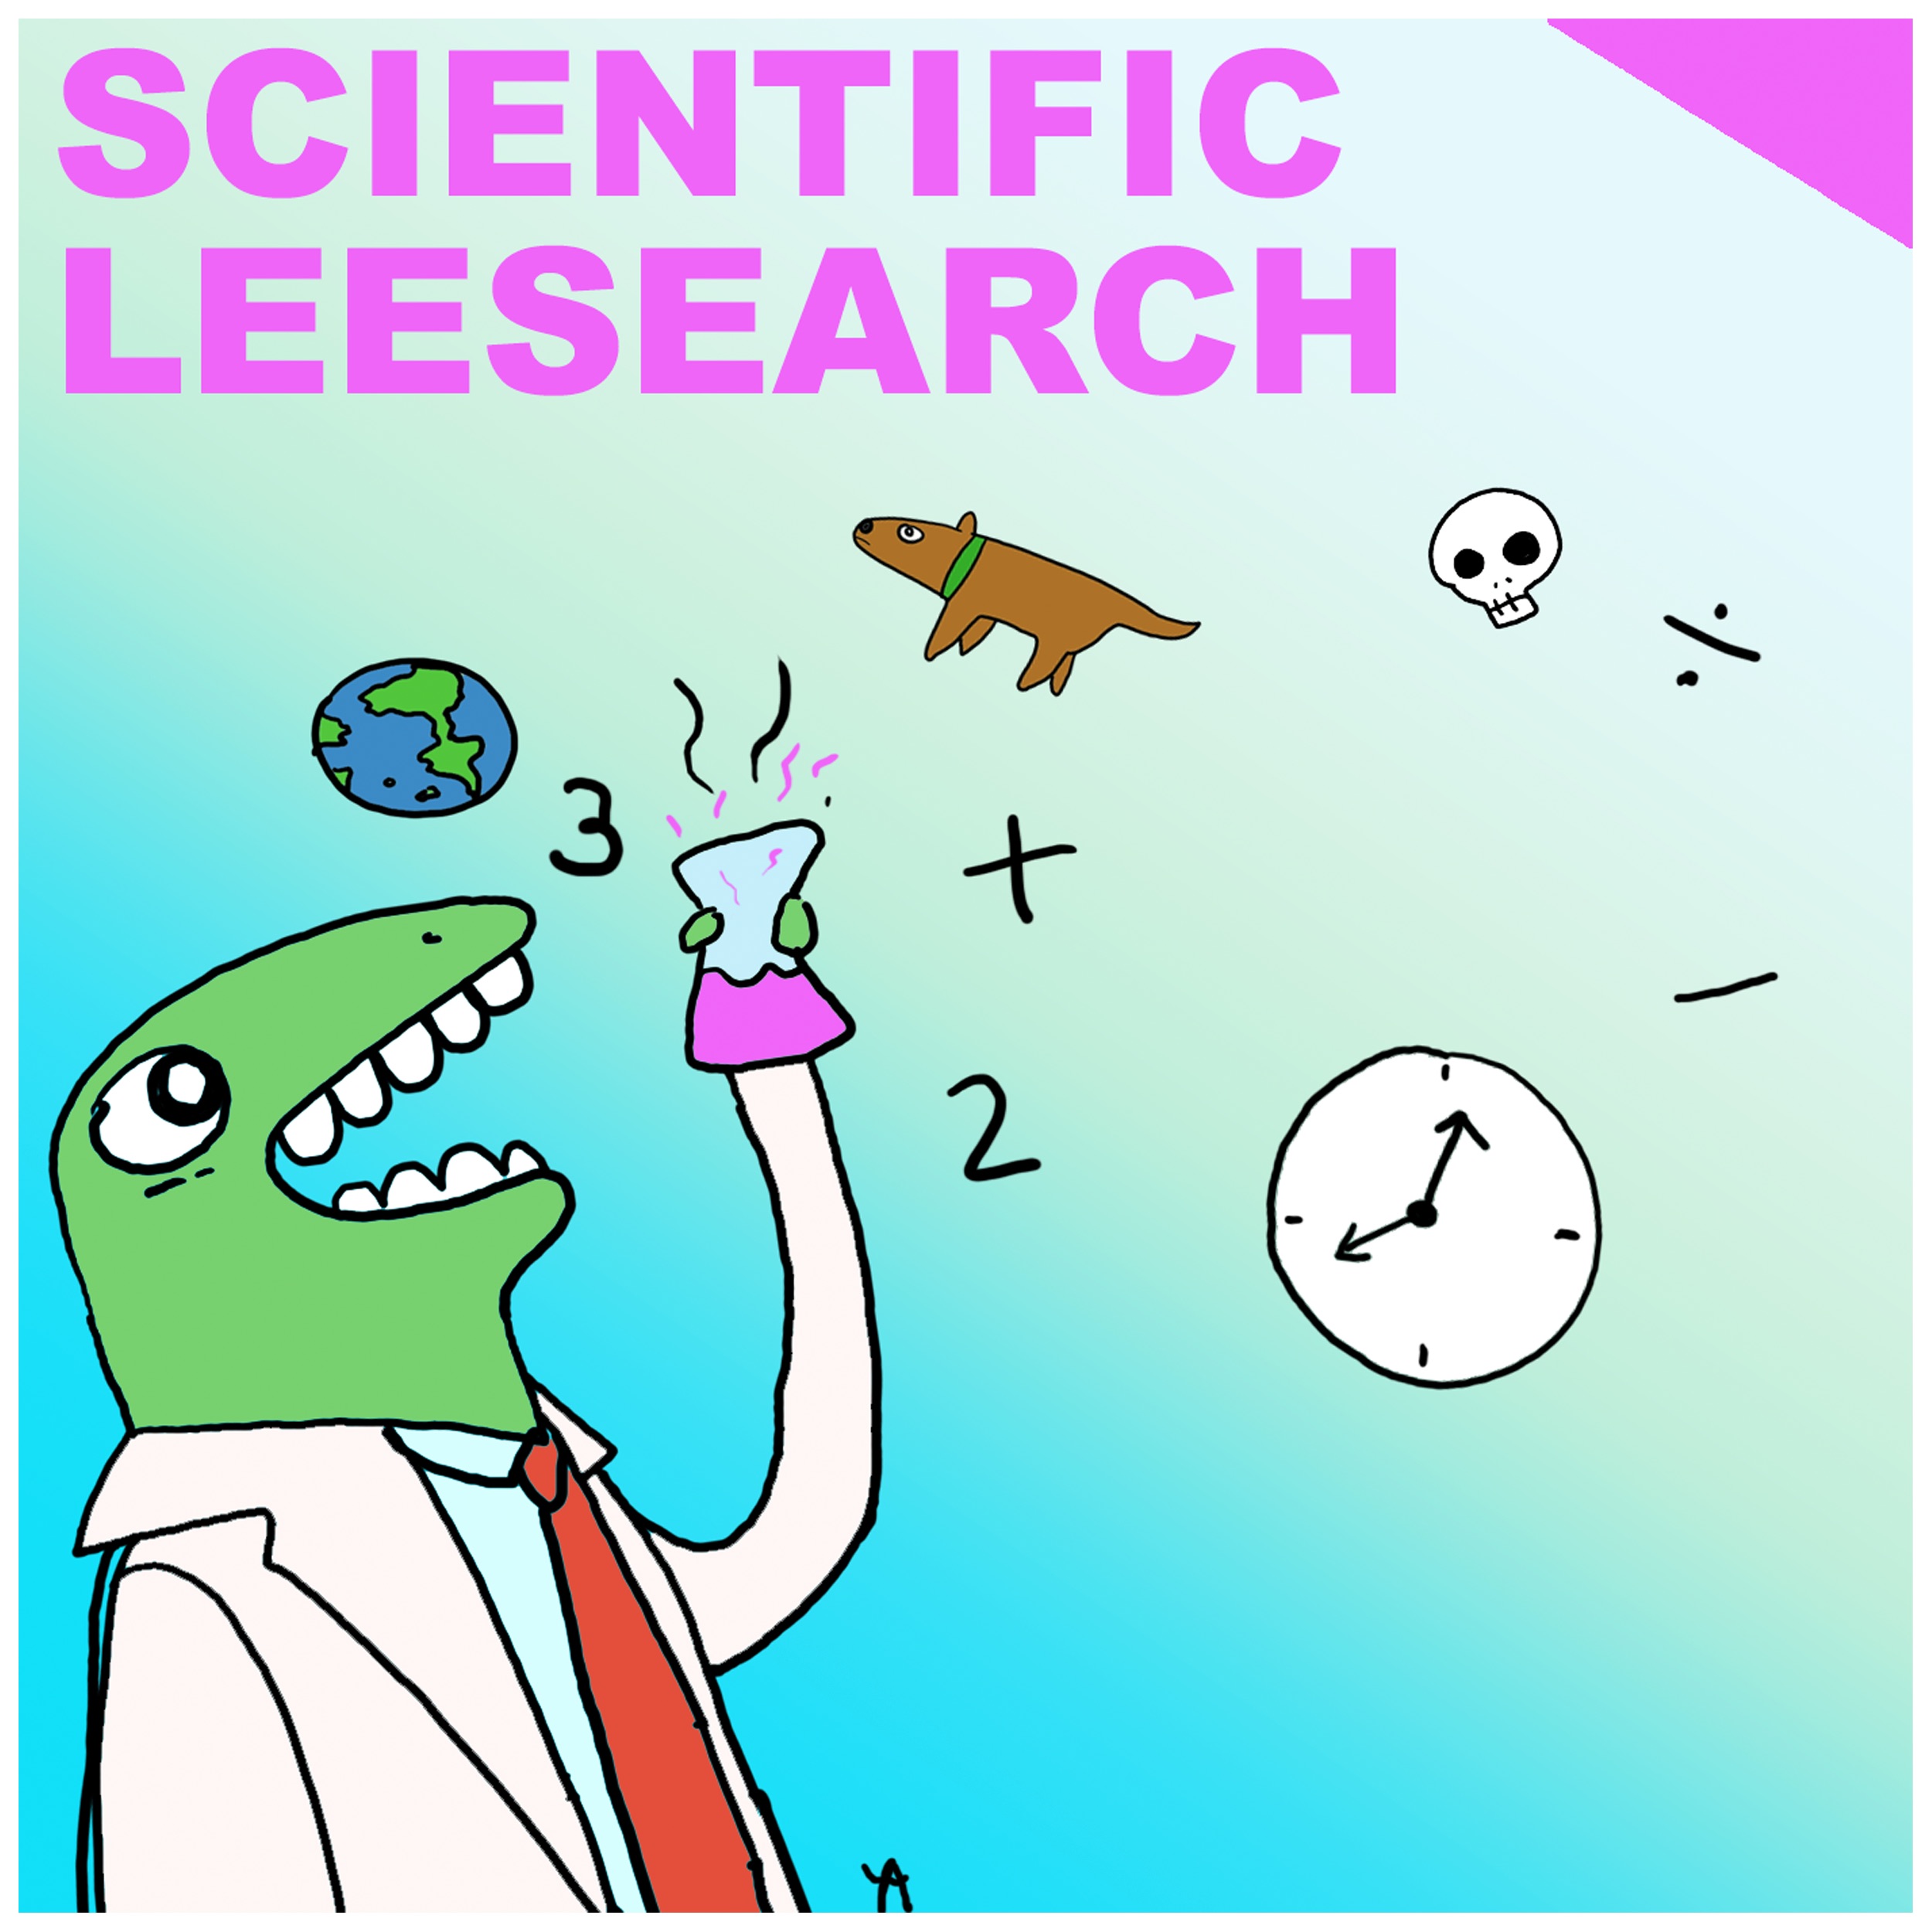 Scientific Leesearch